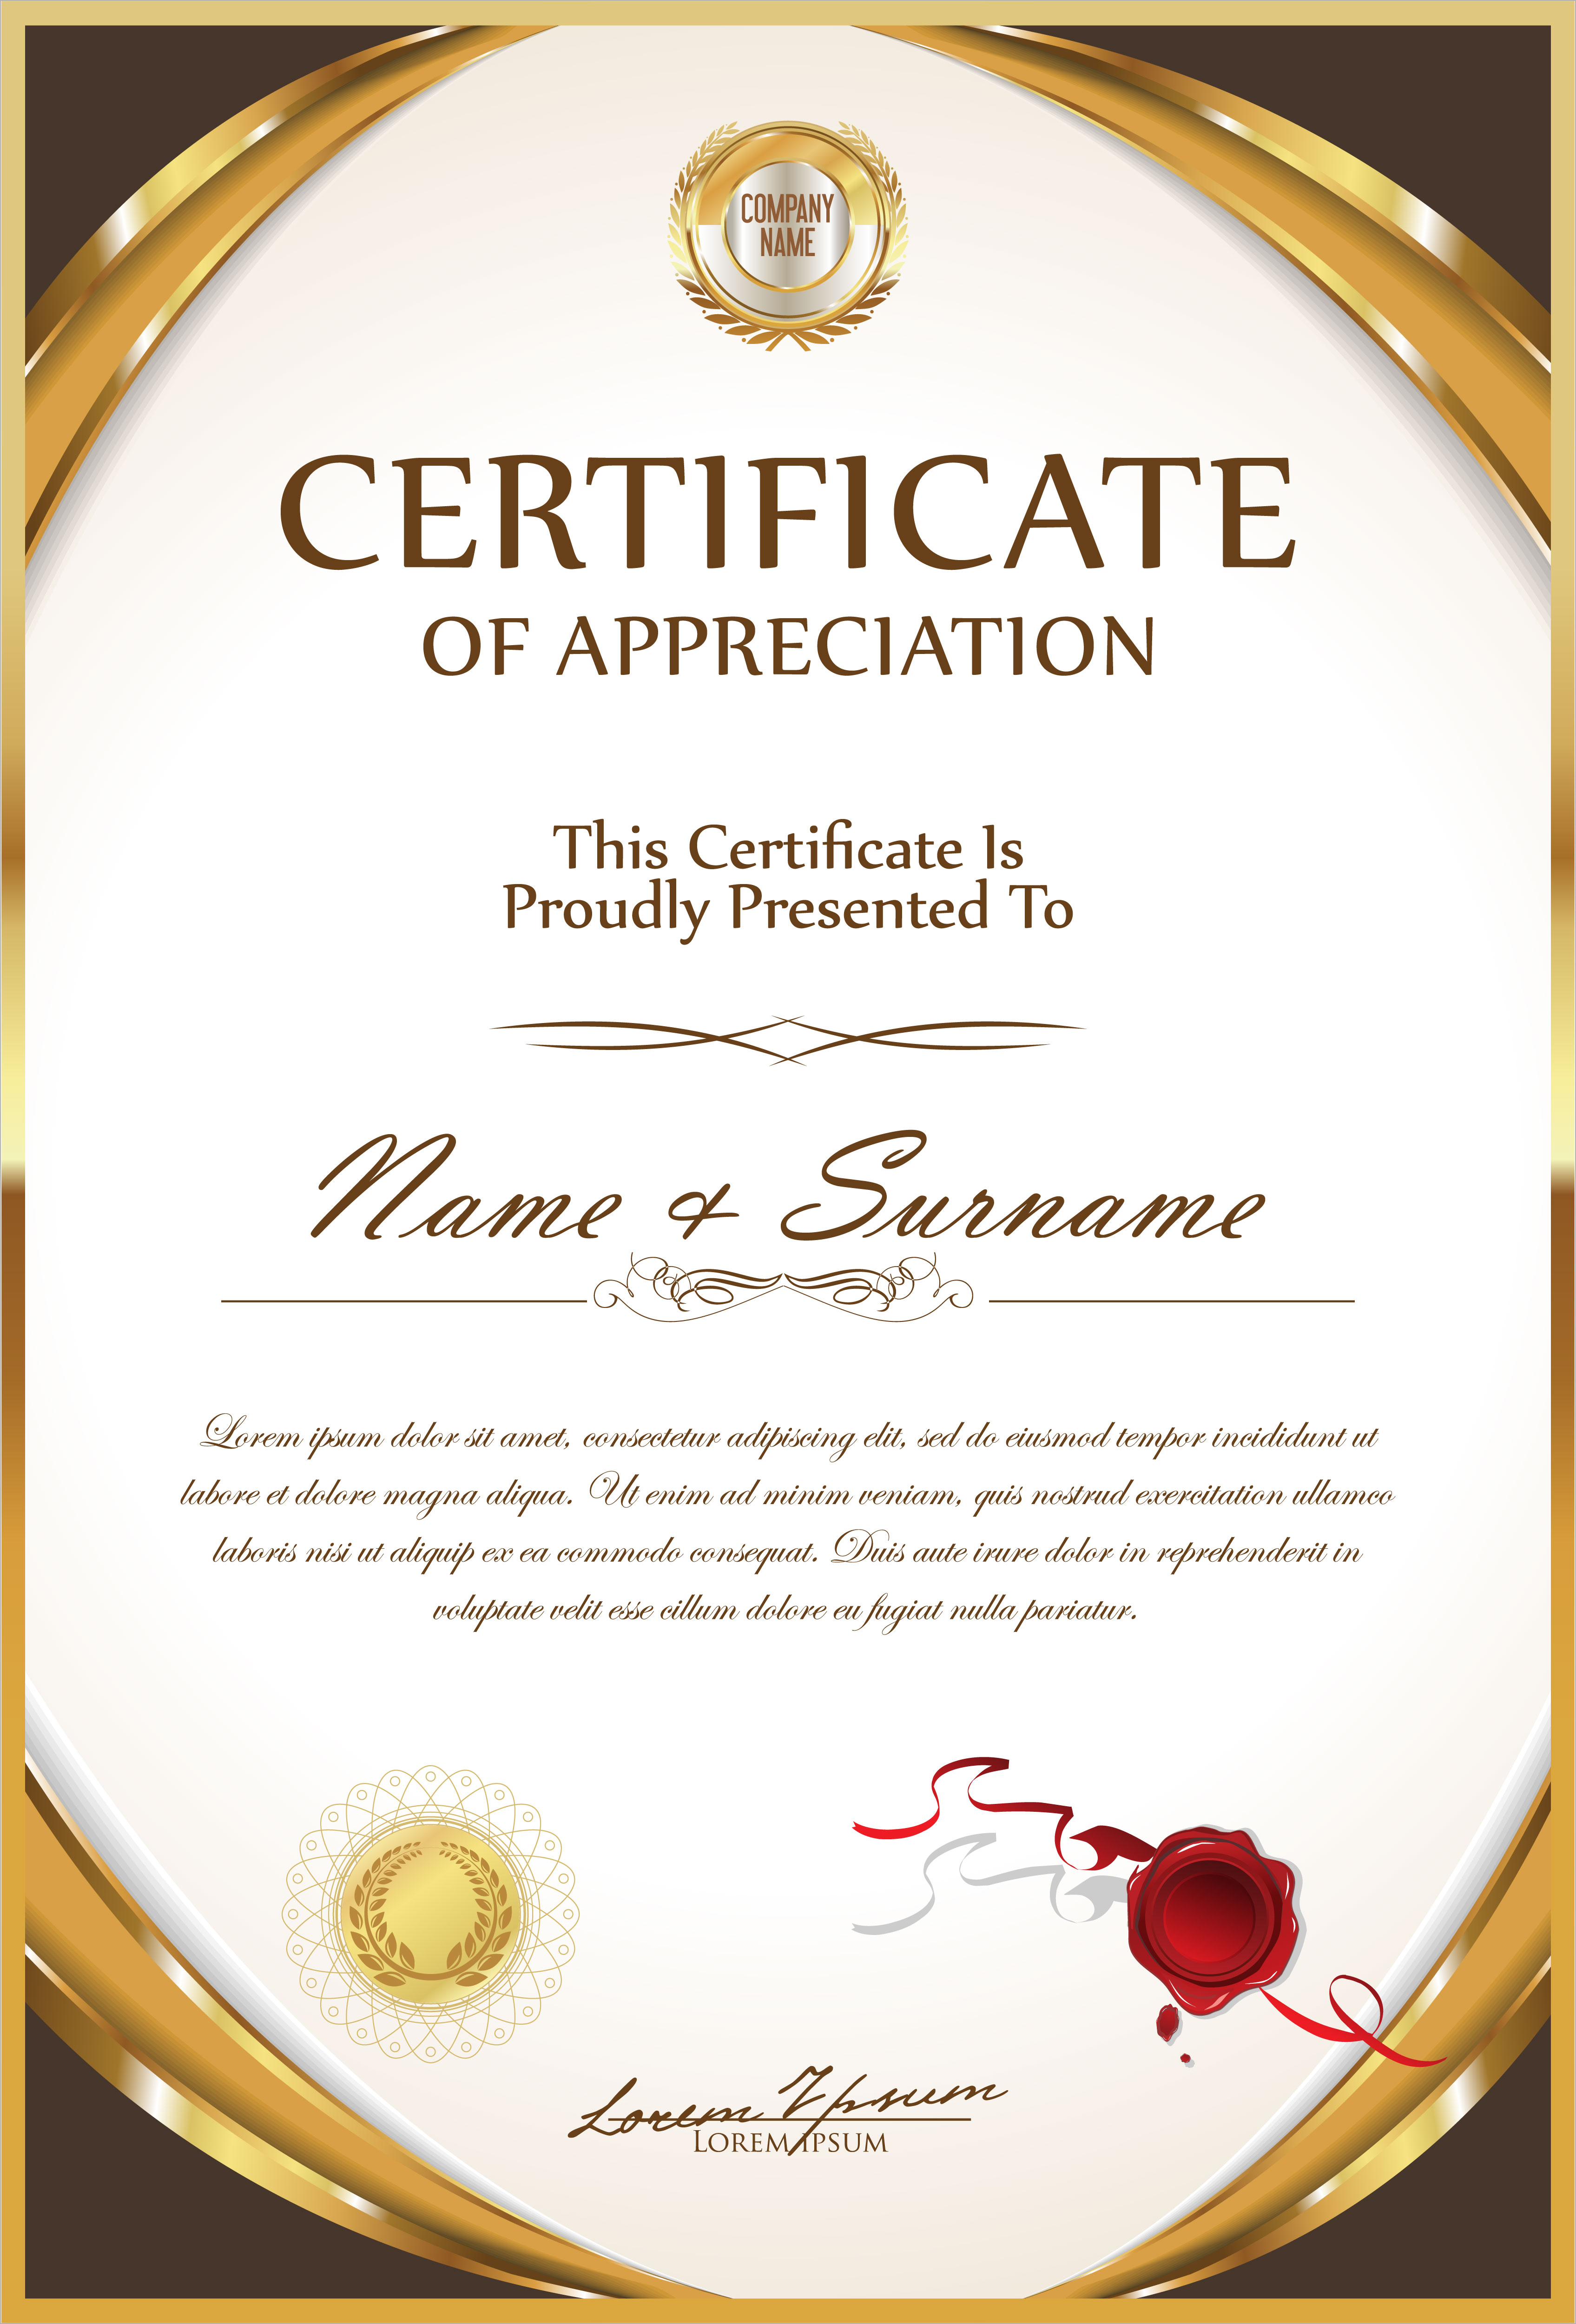 certificate-or-diploma-retro-template-285476-vector-art-at-vecteezy